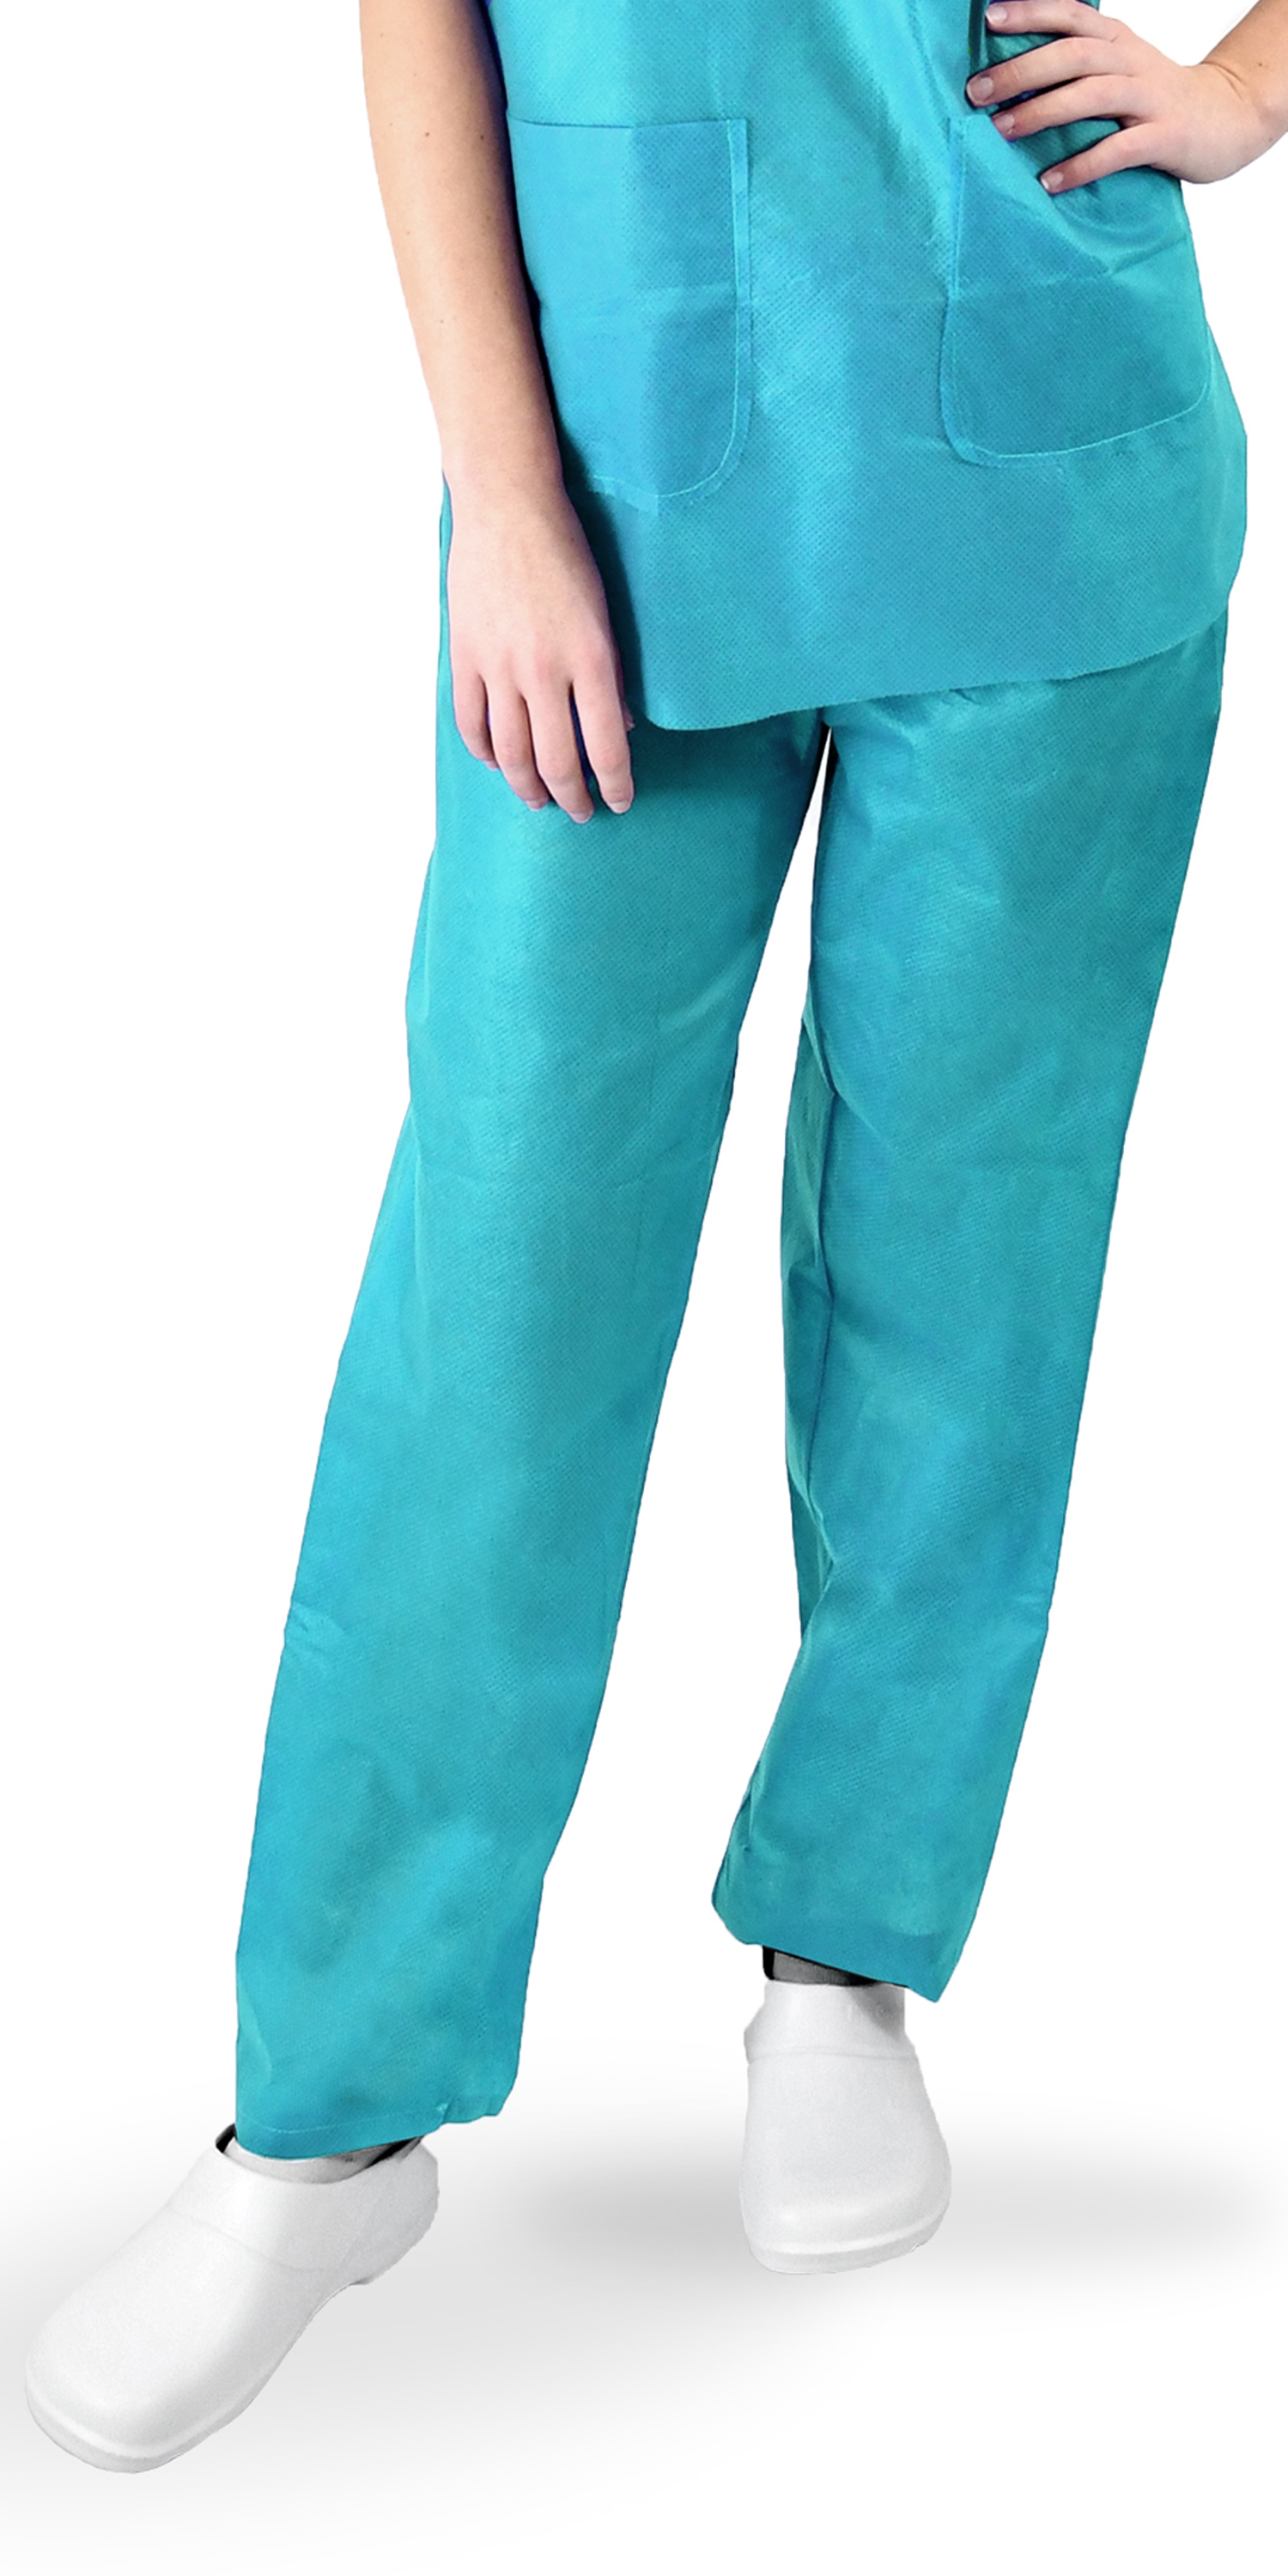 Colorsoft Pyjamas pants